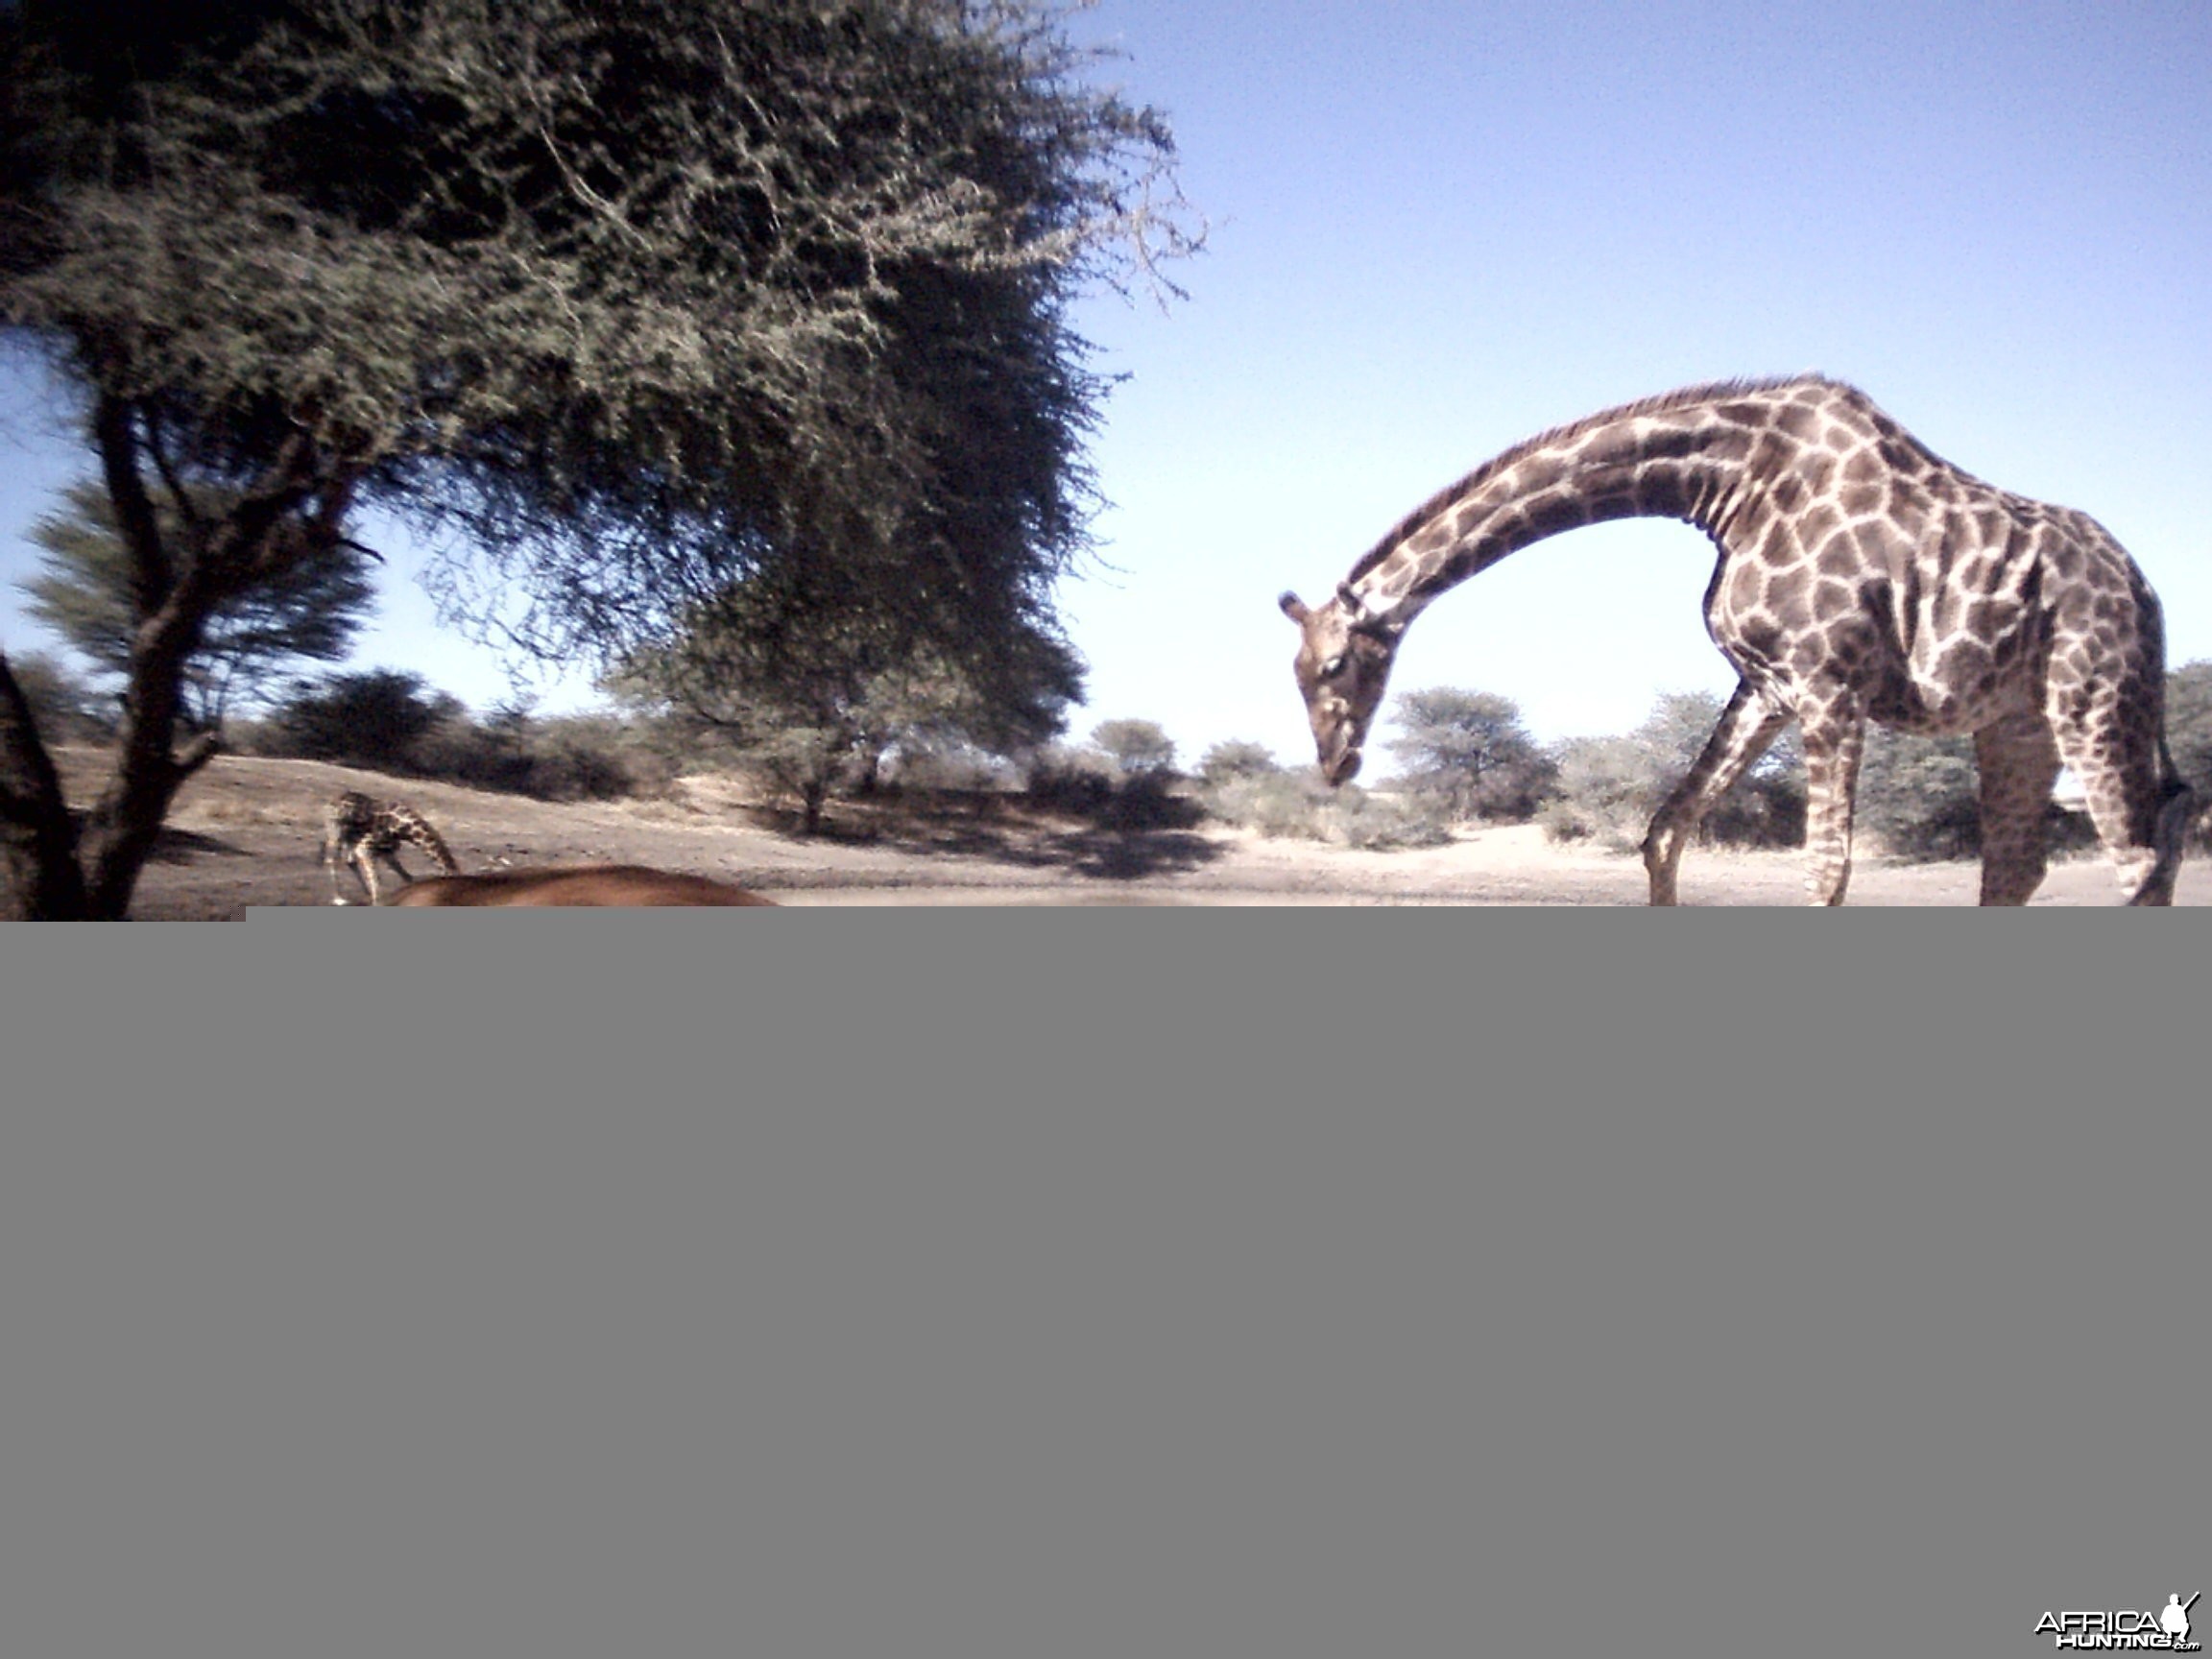 Impala and Giraffe, Namibia